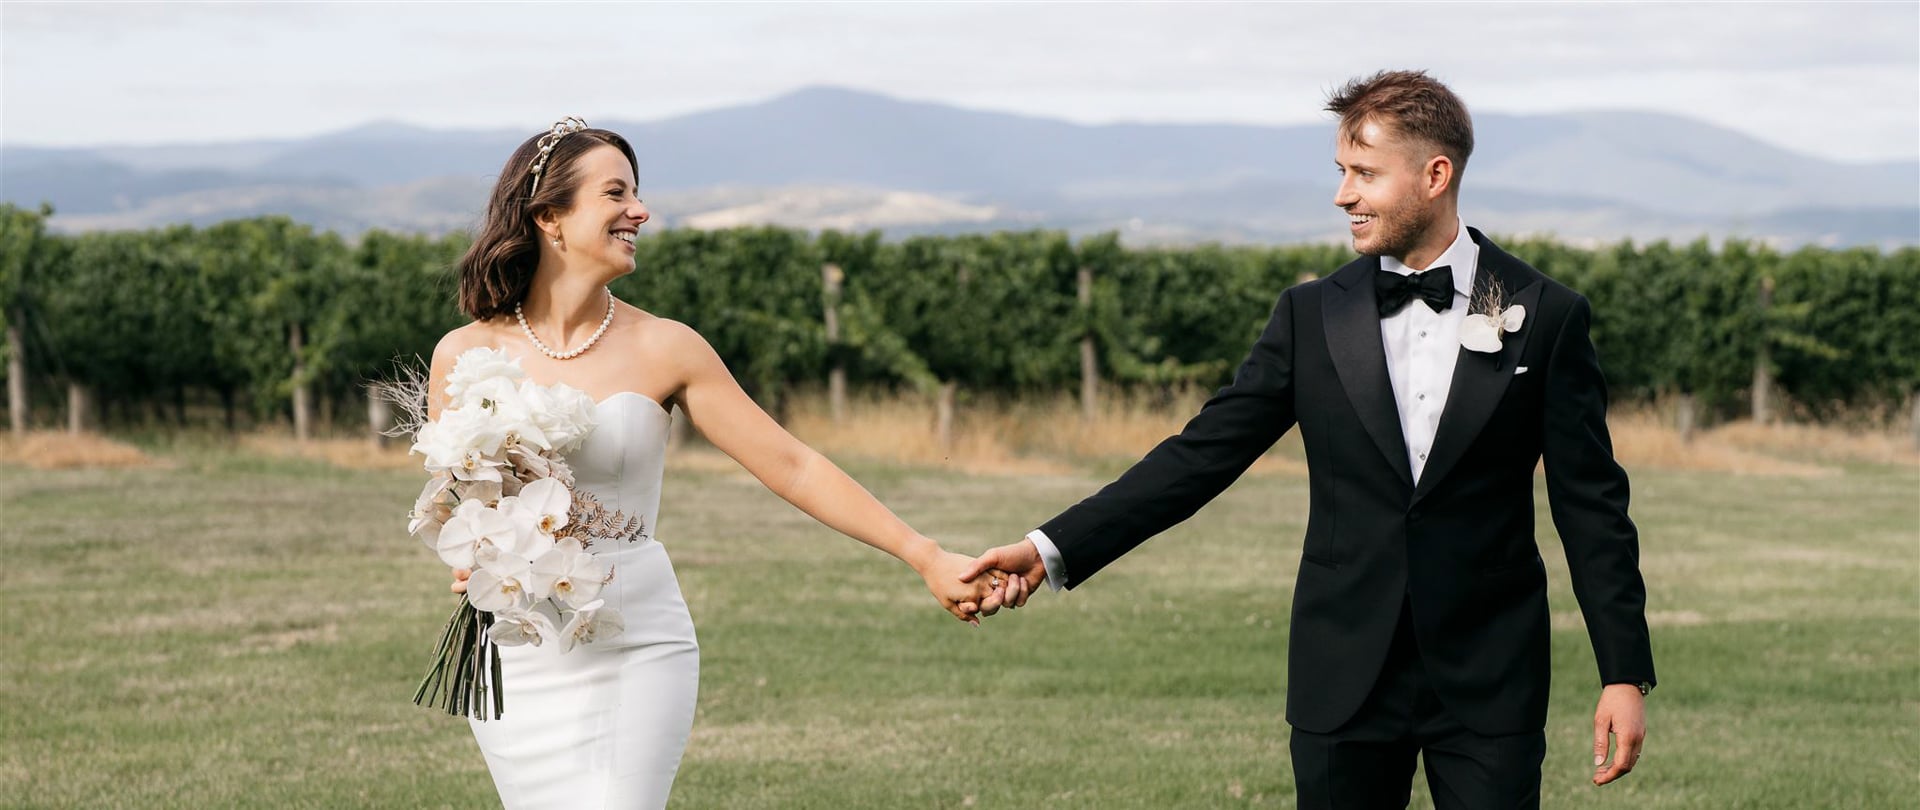 Harrison & Jamie Wedding Video Filmed atYarra Valley,Victoria